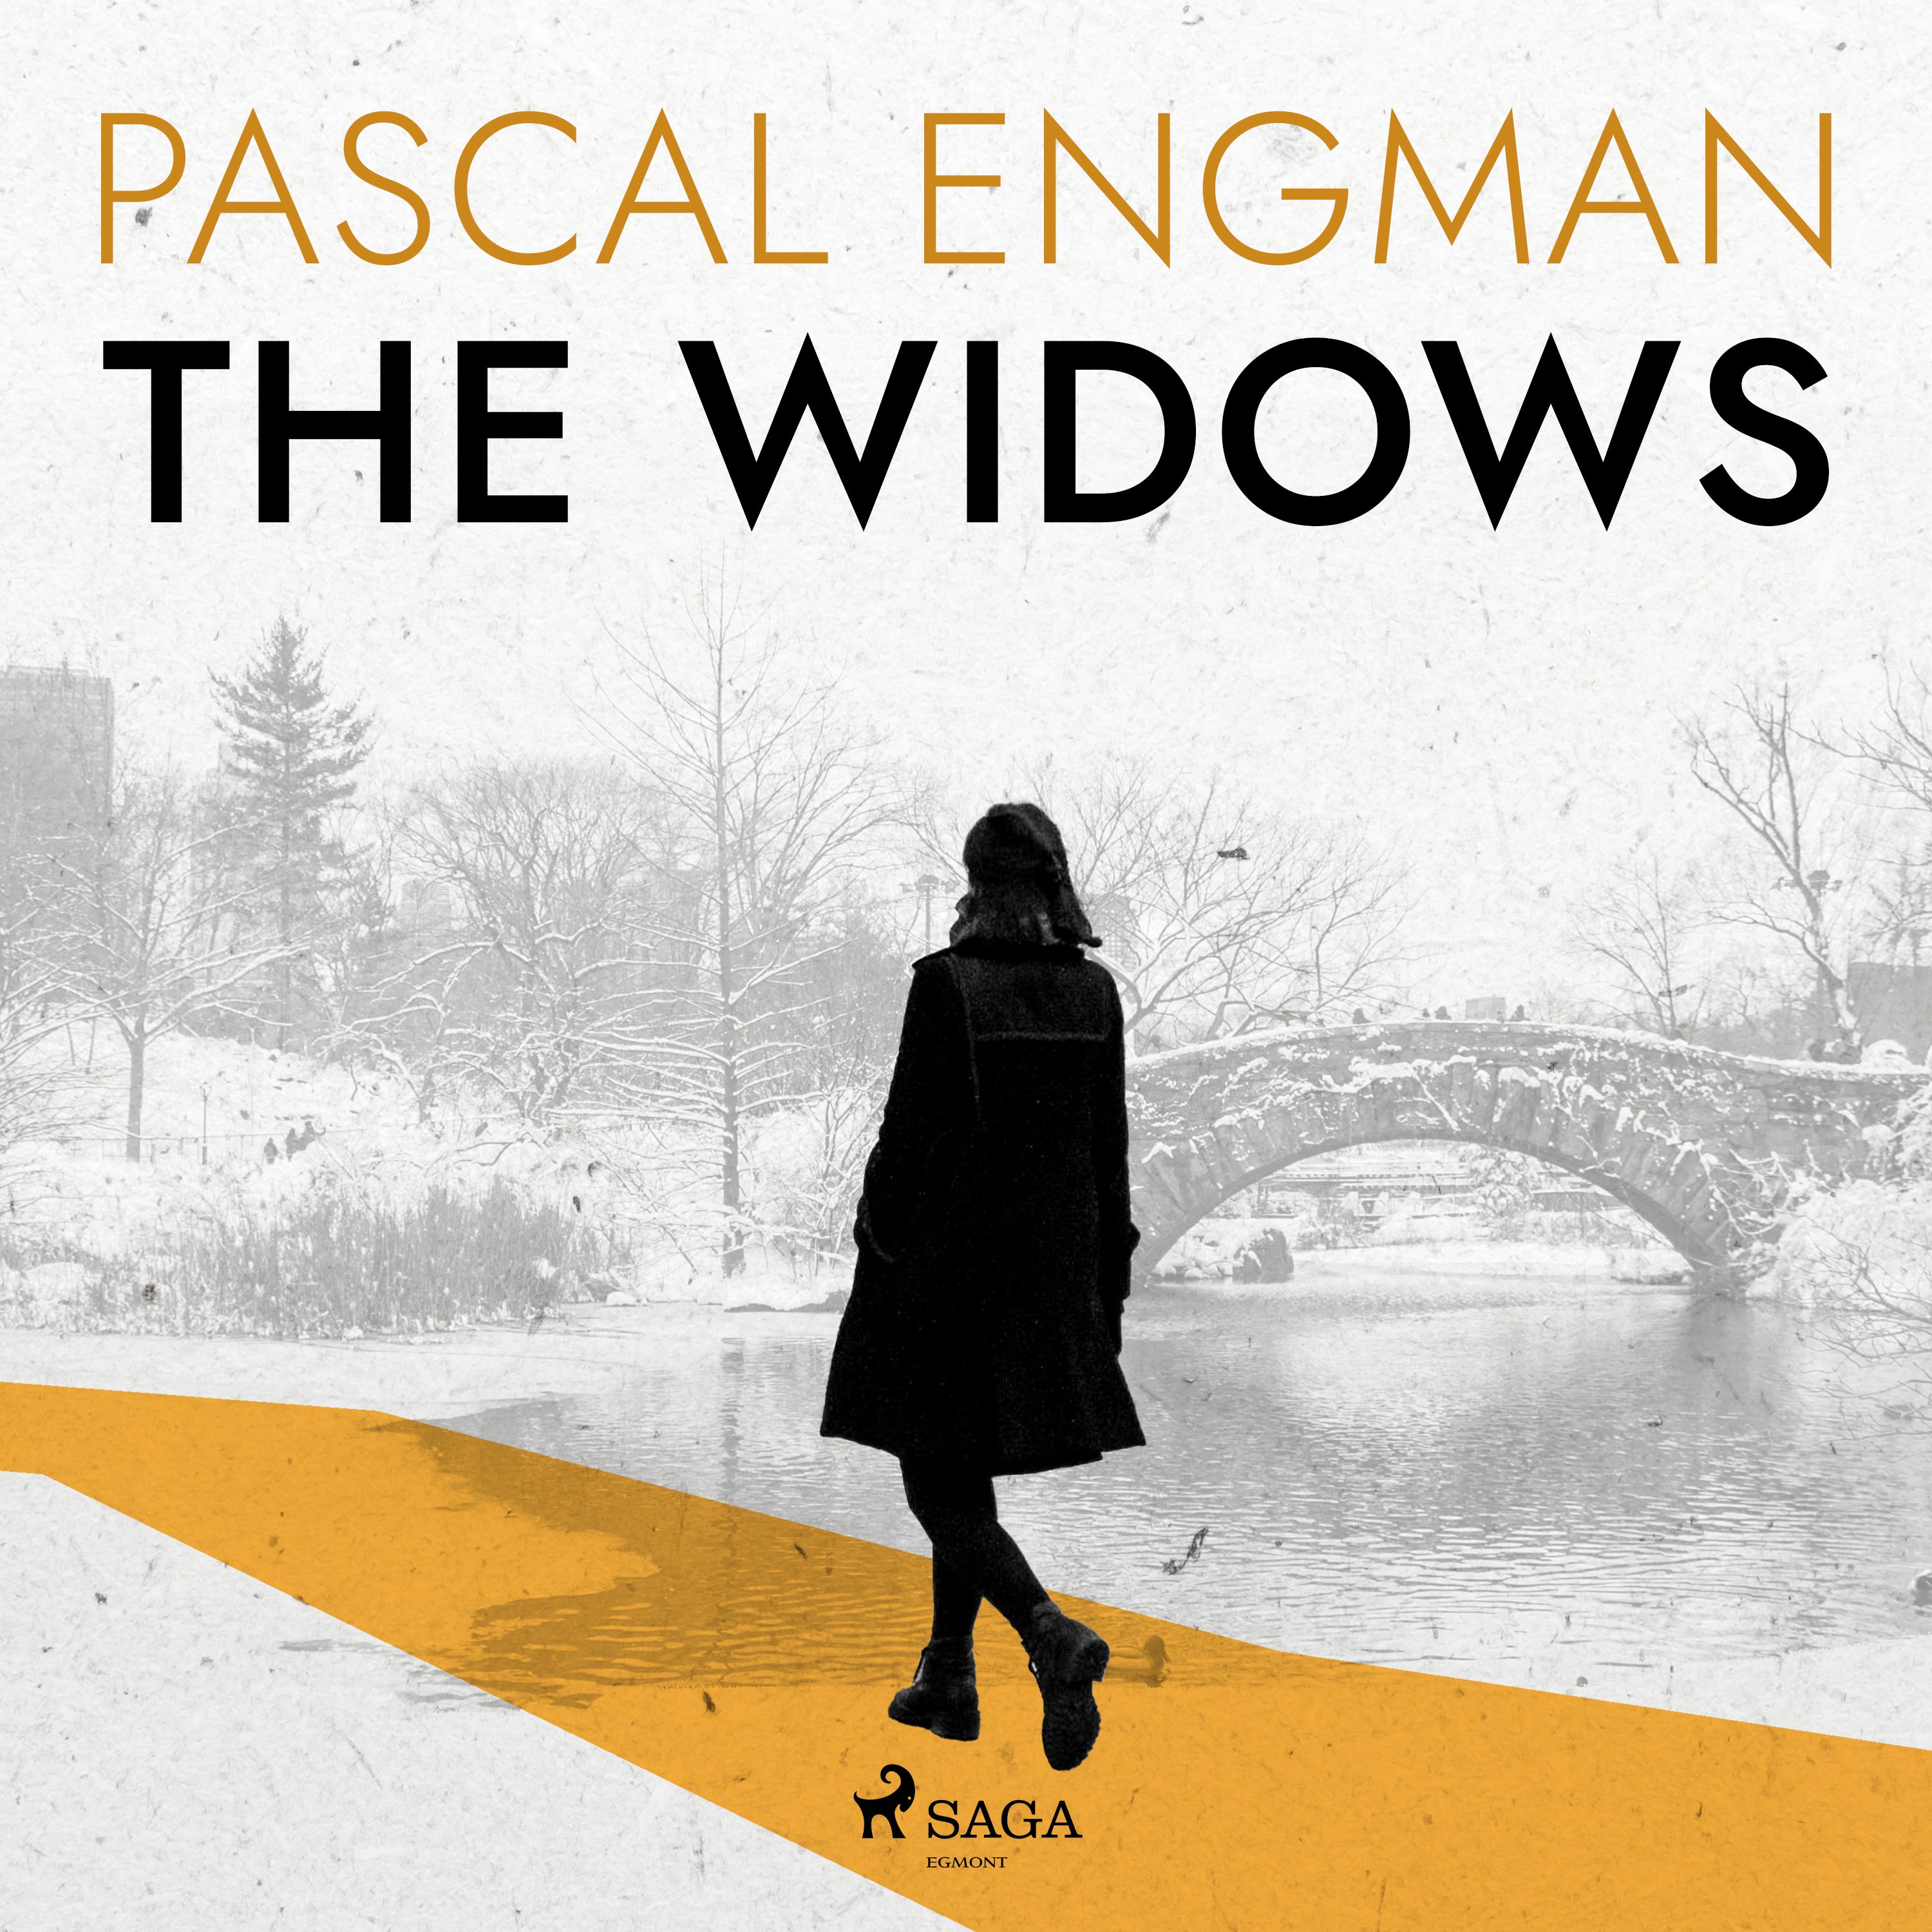 The Widows, ljudbok av Pascal Engman